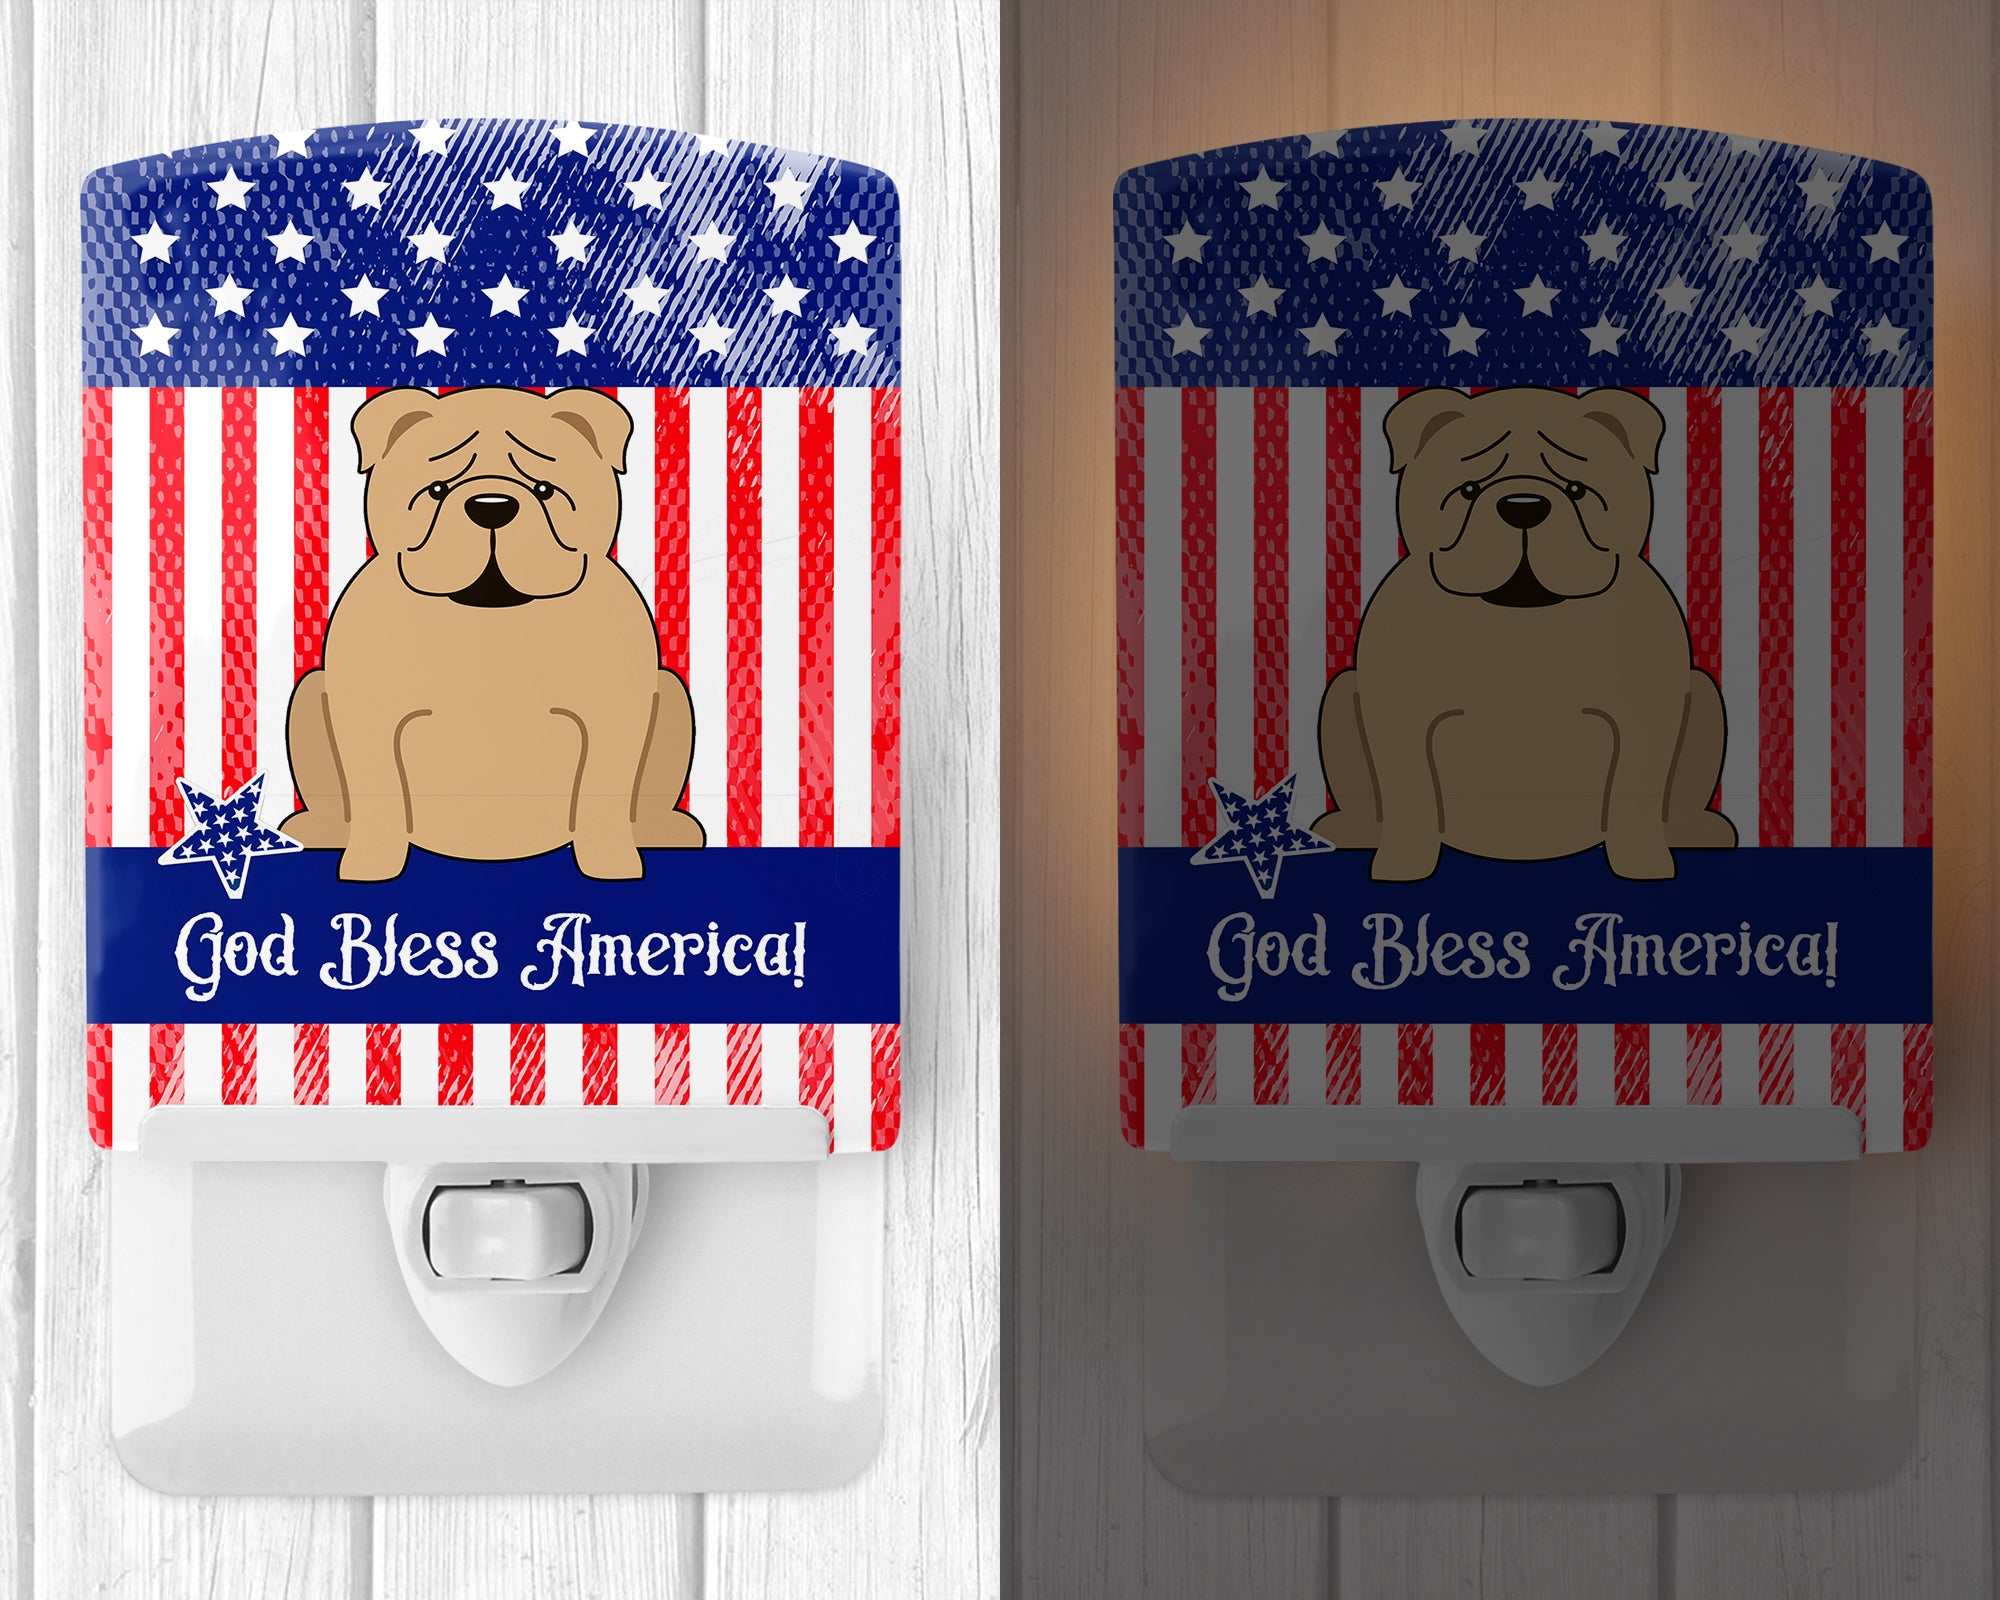 Patriotic USA English Bulldog Fawn Ceramic Night Light BB3119CNL - the-store.com